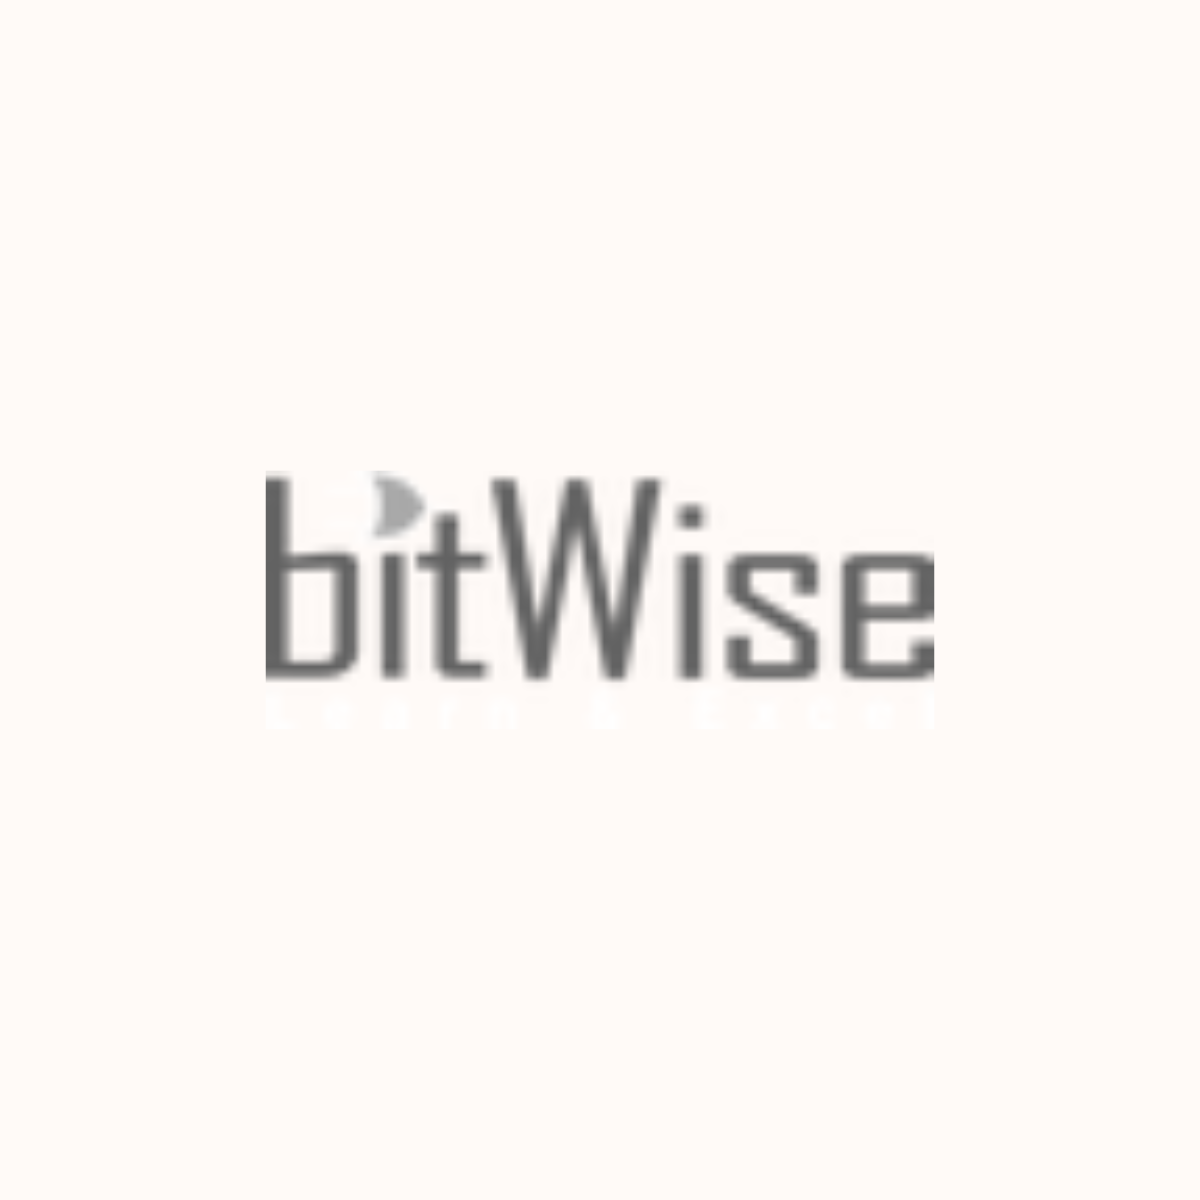 BitWise